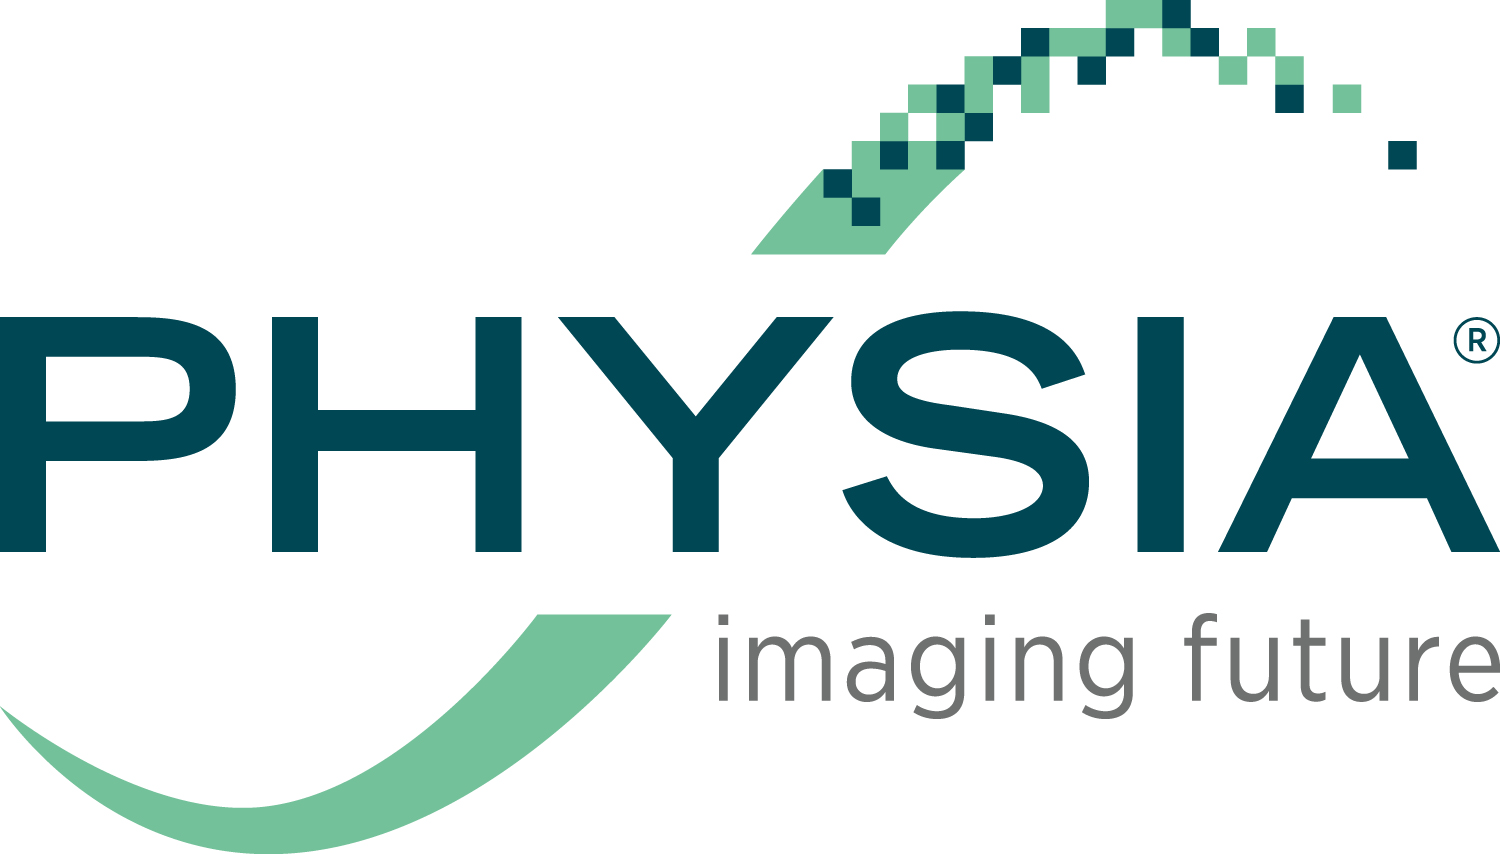 Physia GmbH